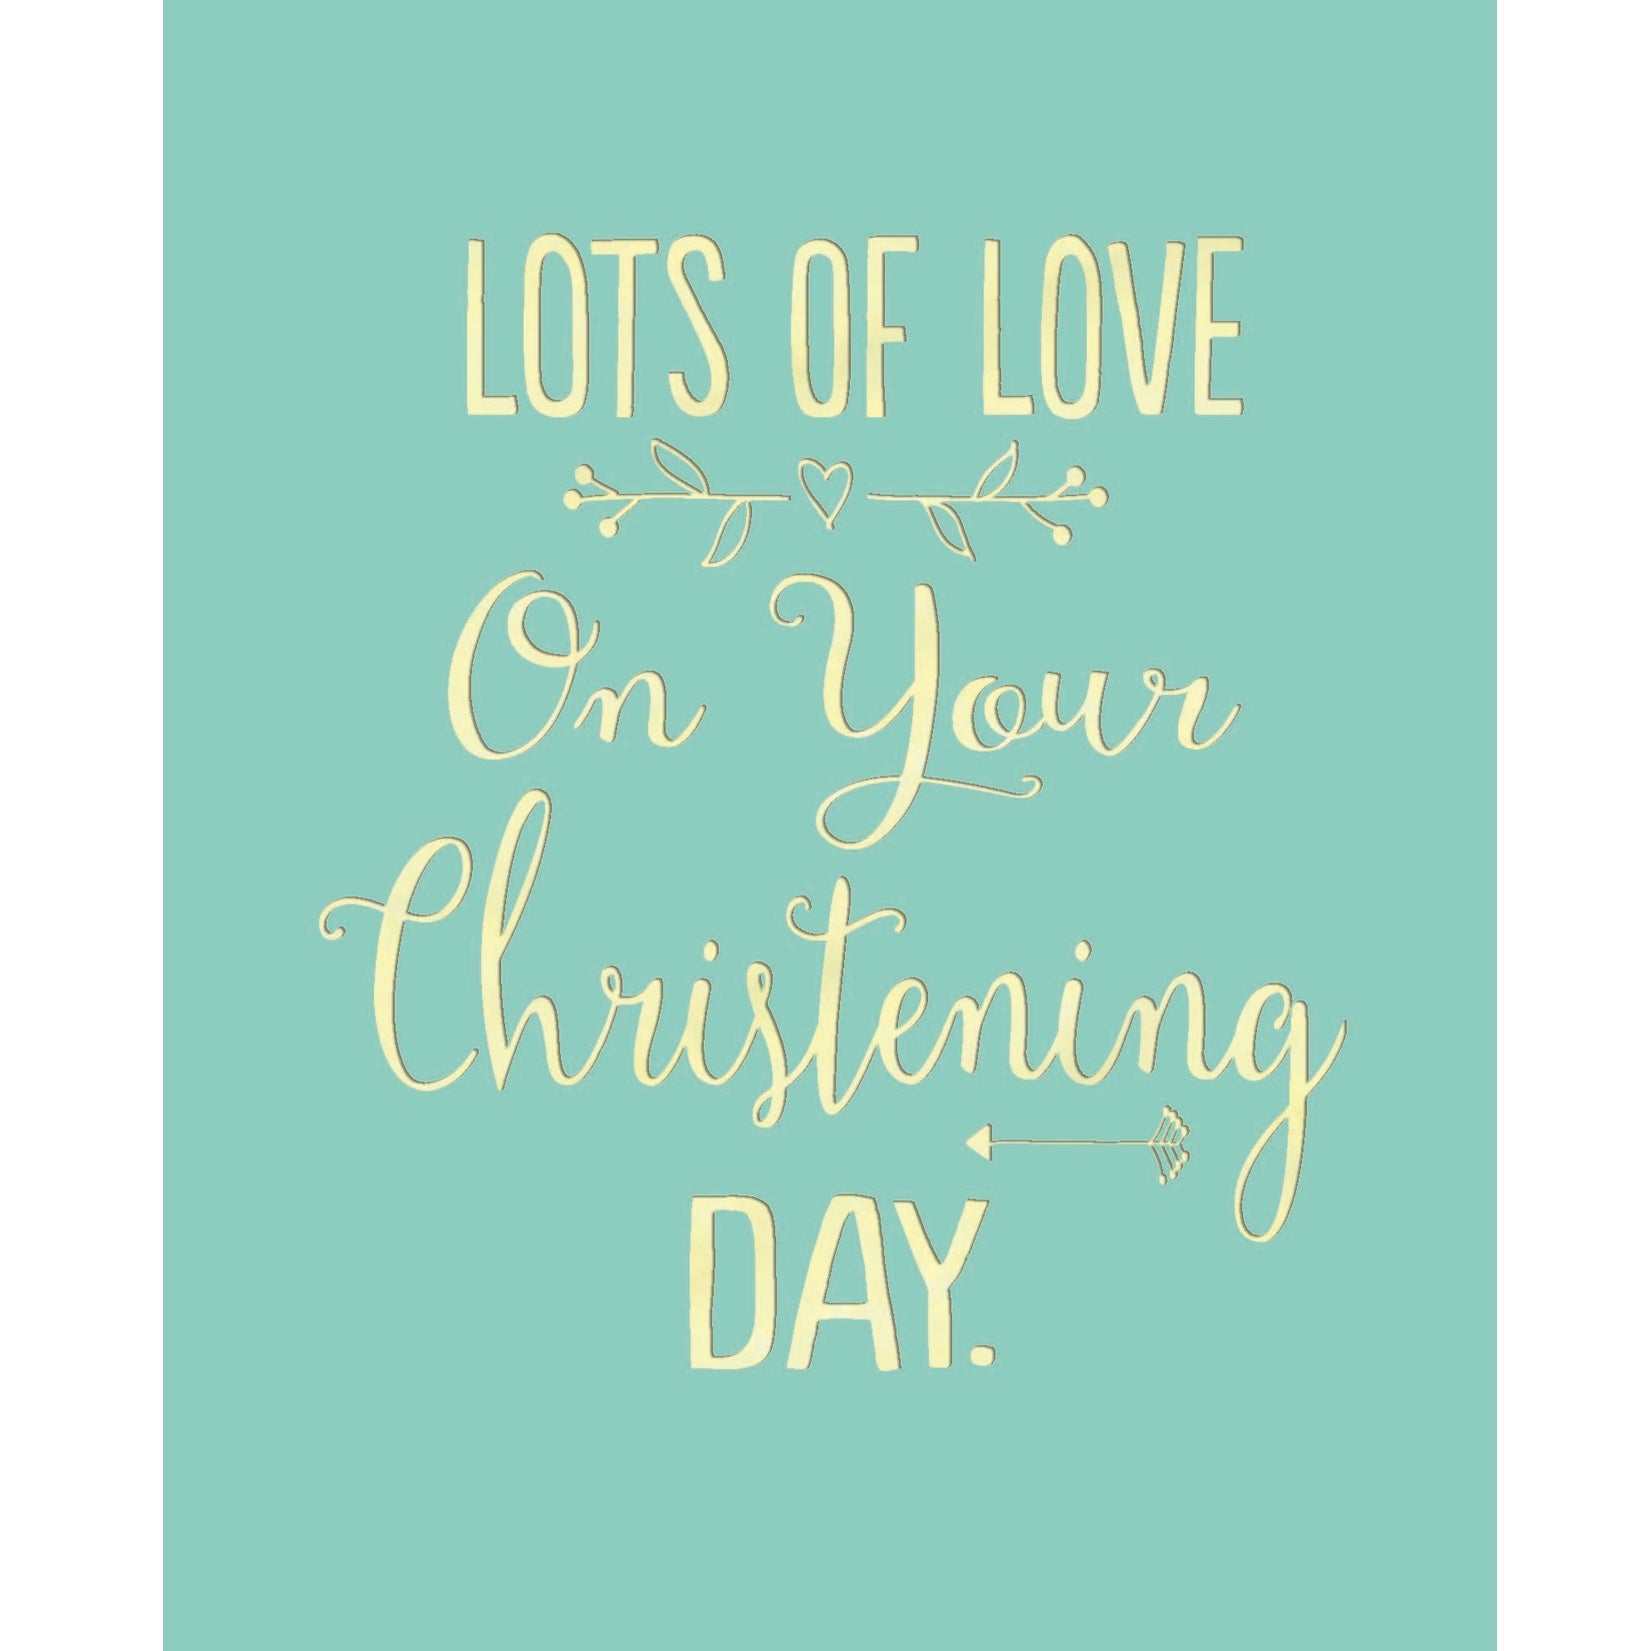  "Christening Day" Greeting Card, BB-Bluebell 33, Putti Fine Furnishings